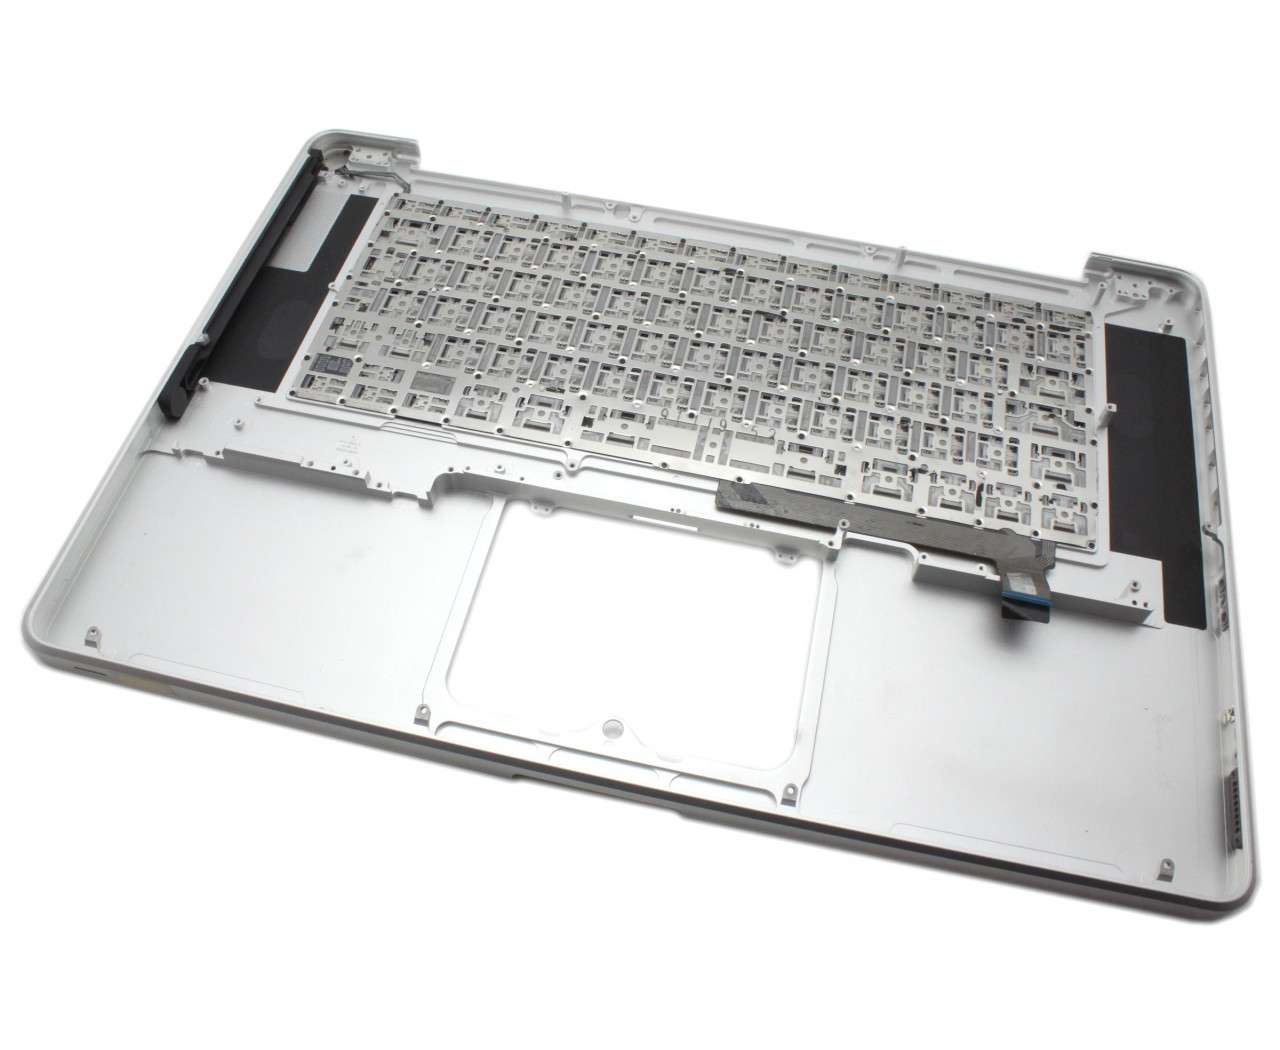 Tastatura Apple MacBook Pro 15 MC373LL A Neagra cu Palmrest Argintiu Refurbished Apple Apple